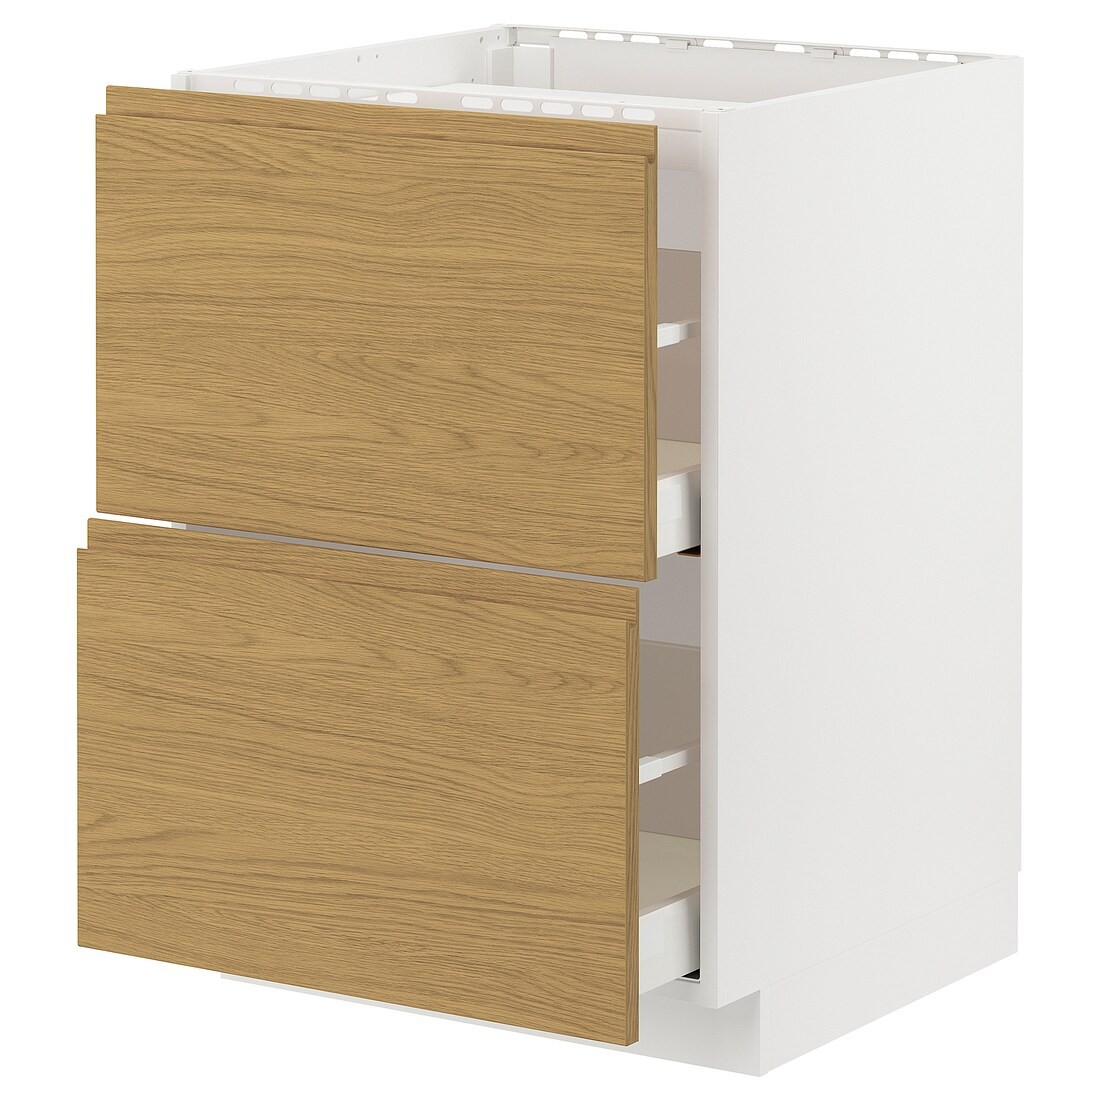 IKEA METOD / MAXIMERA шкаф д/варочной панели/2фасада/2ящ, белый / Voxtorp имитация дуб, 60x60 см 19538487 195.384.87